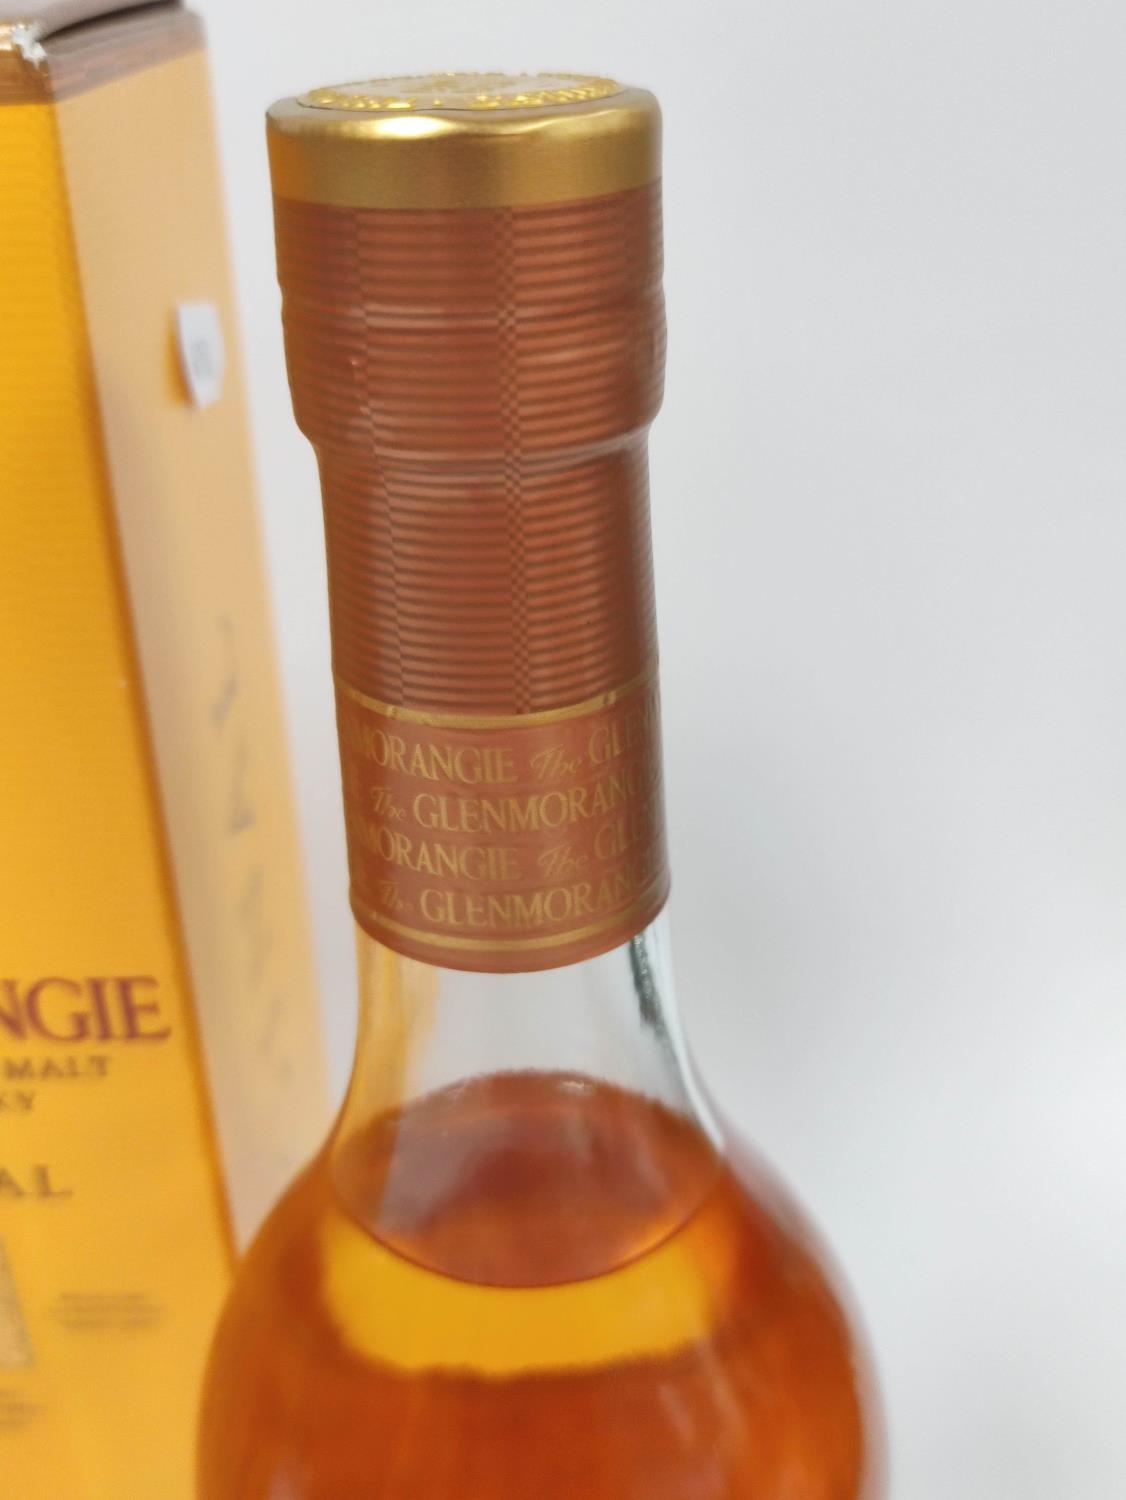 Two bottles of Glenmorangie the original ten years old highland single malt Scotch whisky, 70cl, 40% - Image 5 of 5